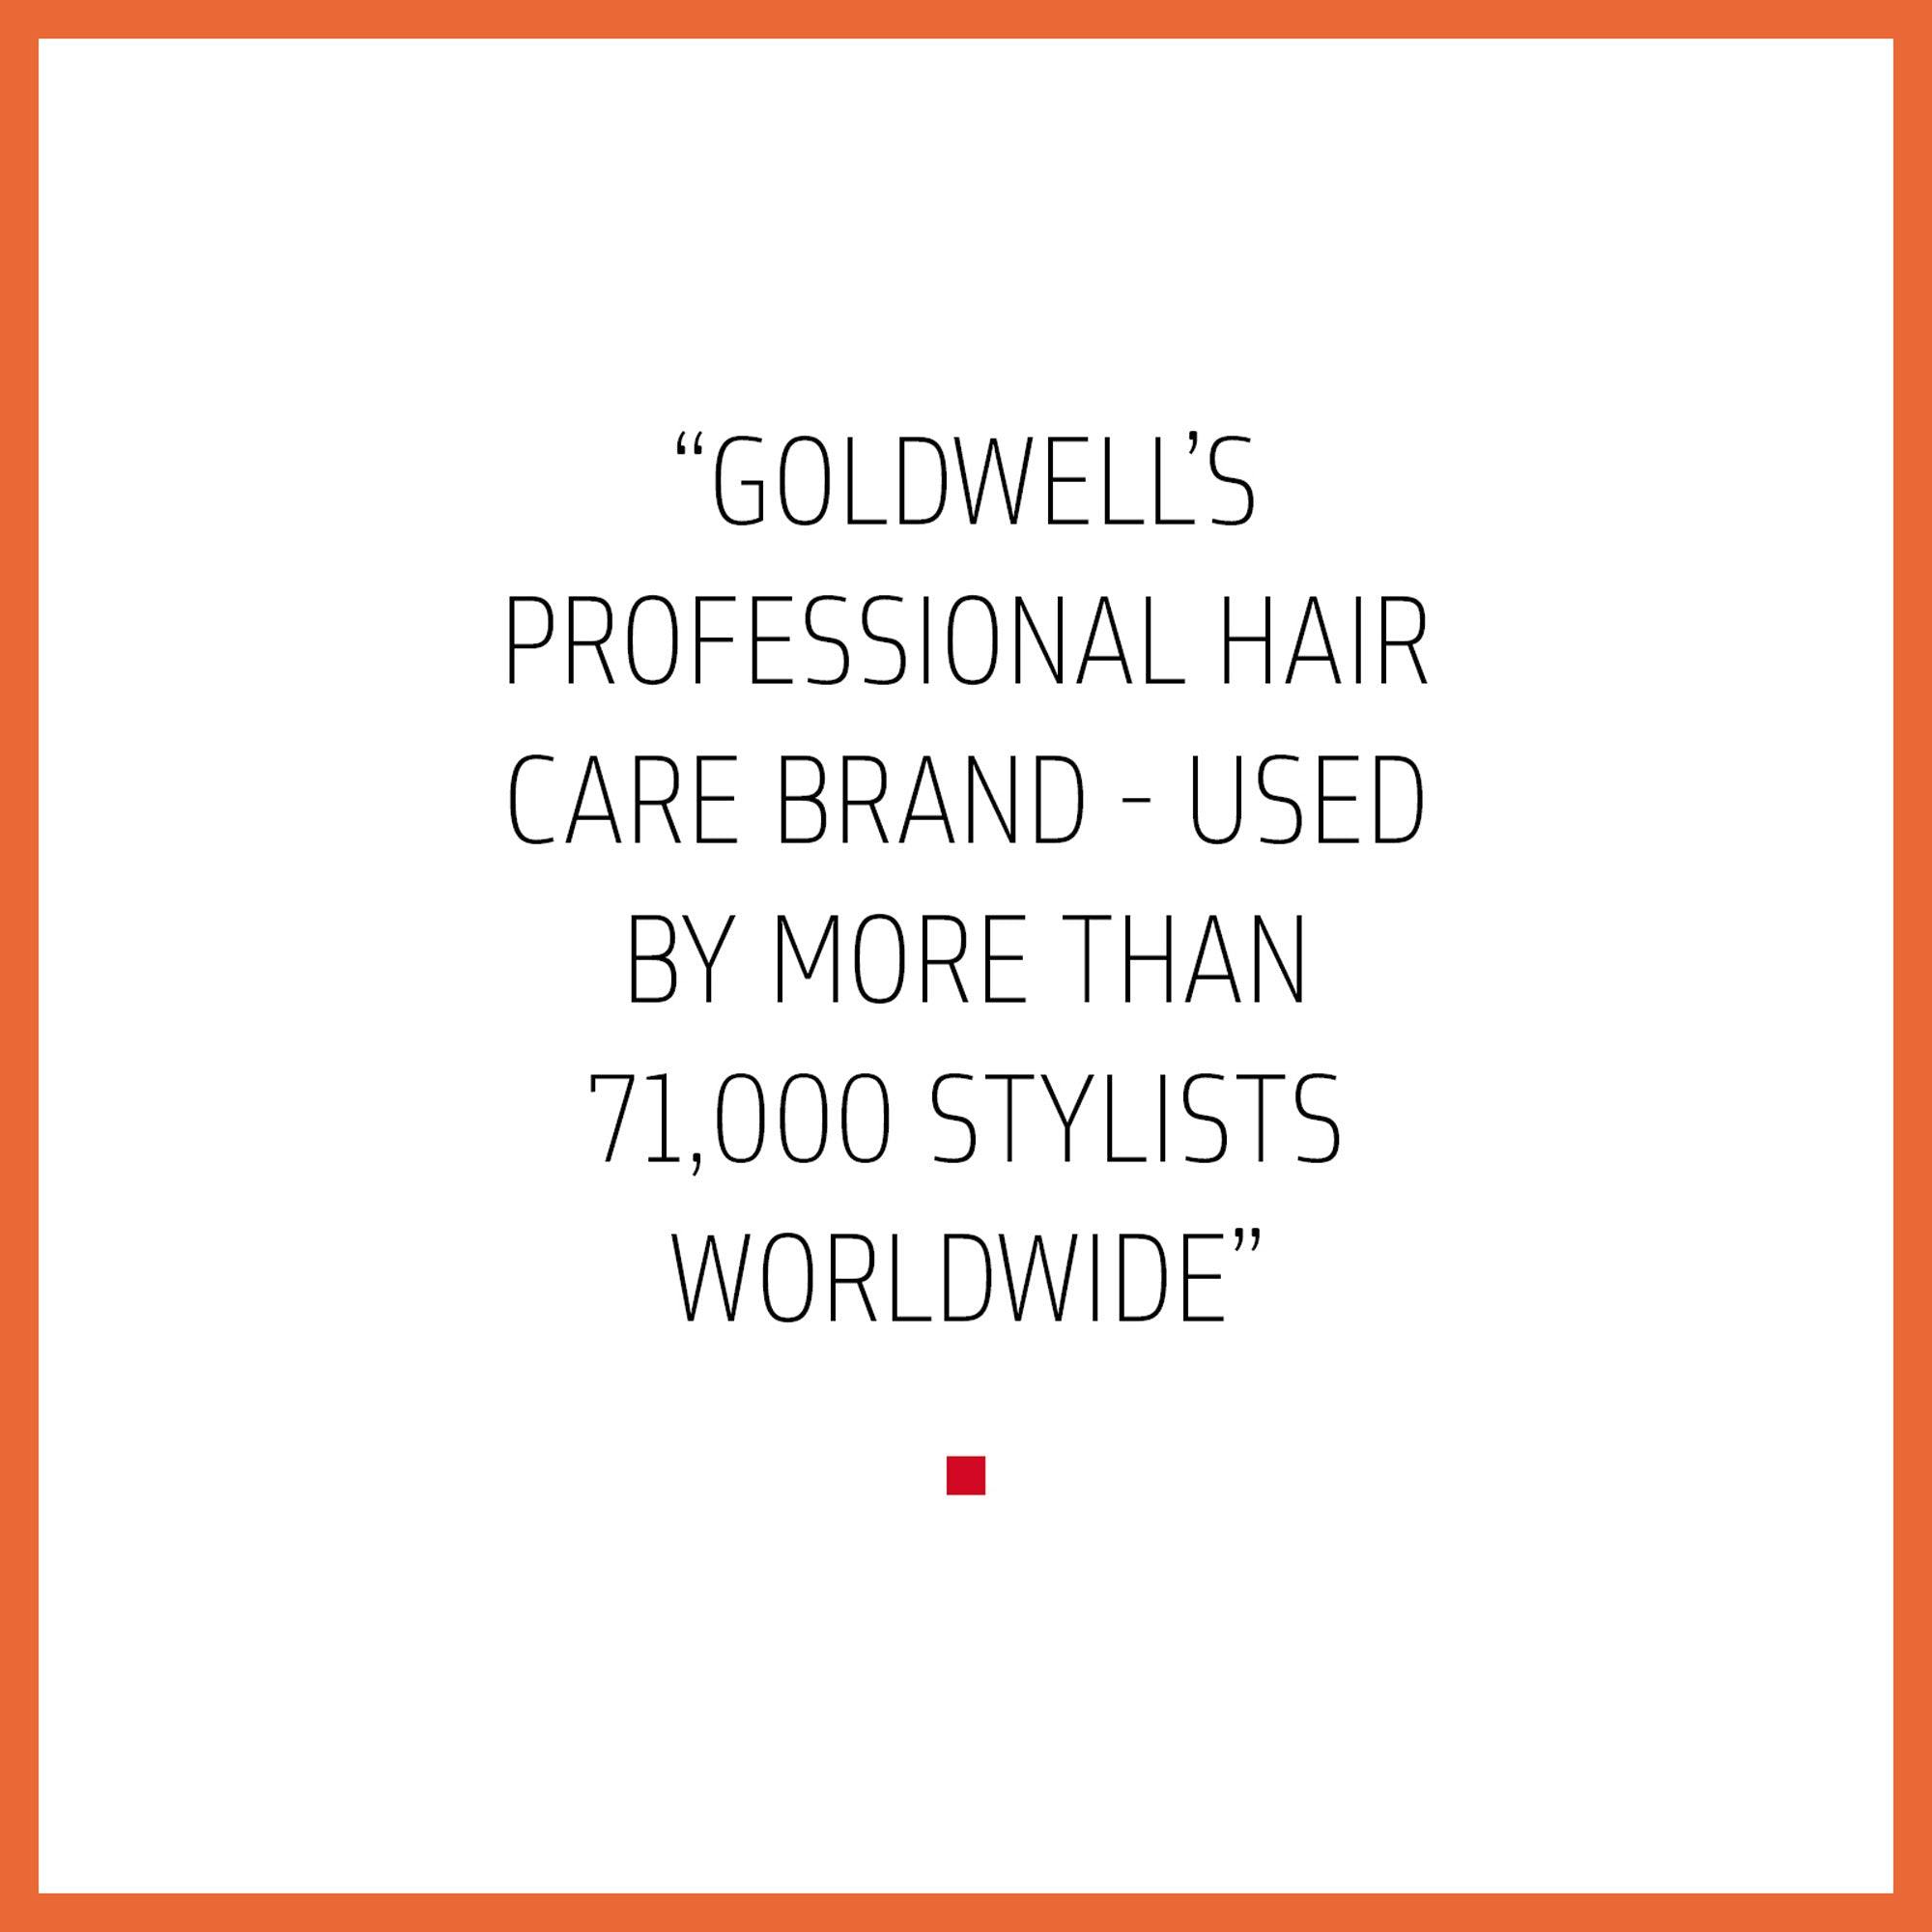 Goldwell Dualsenses Color Revive Conditioner - Light Warm Blonde 200ml